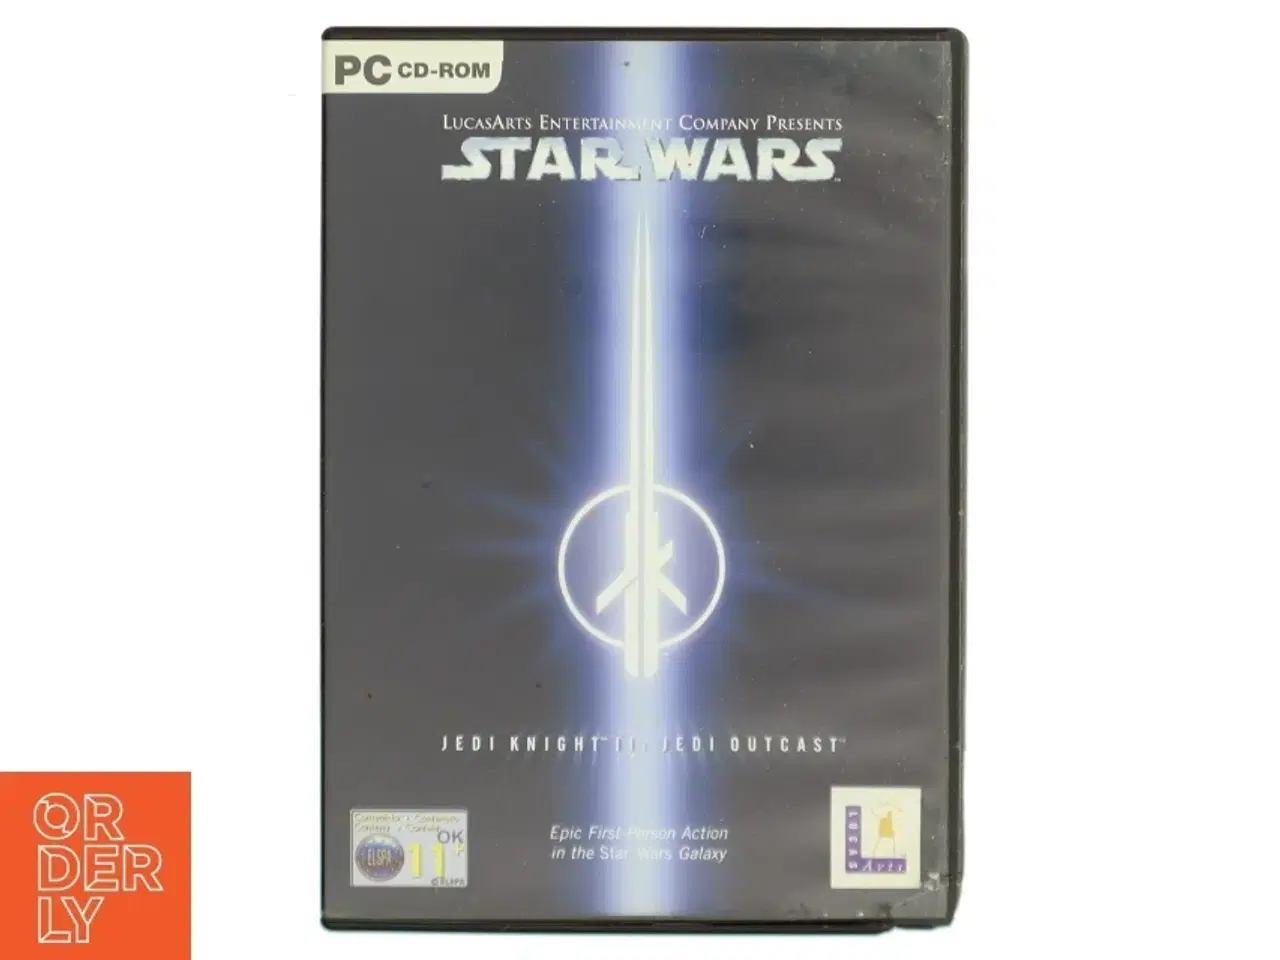 Billede 1 - Star Wars Jedi Knight II: Jedi Outcast PC-spil fra LucasArts